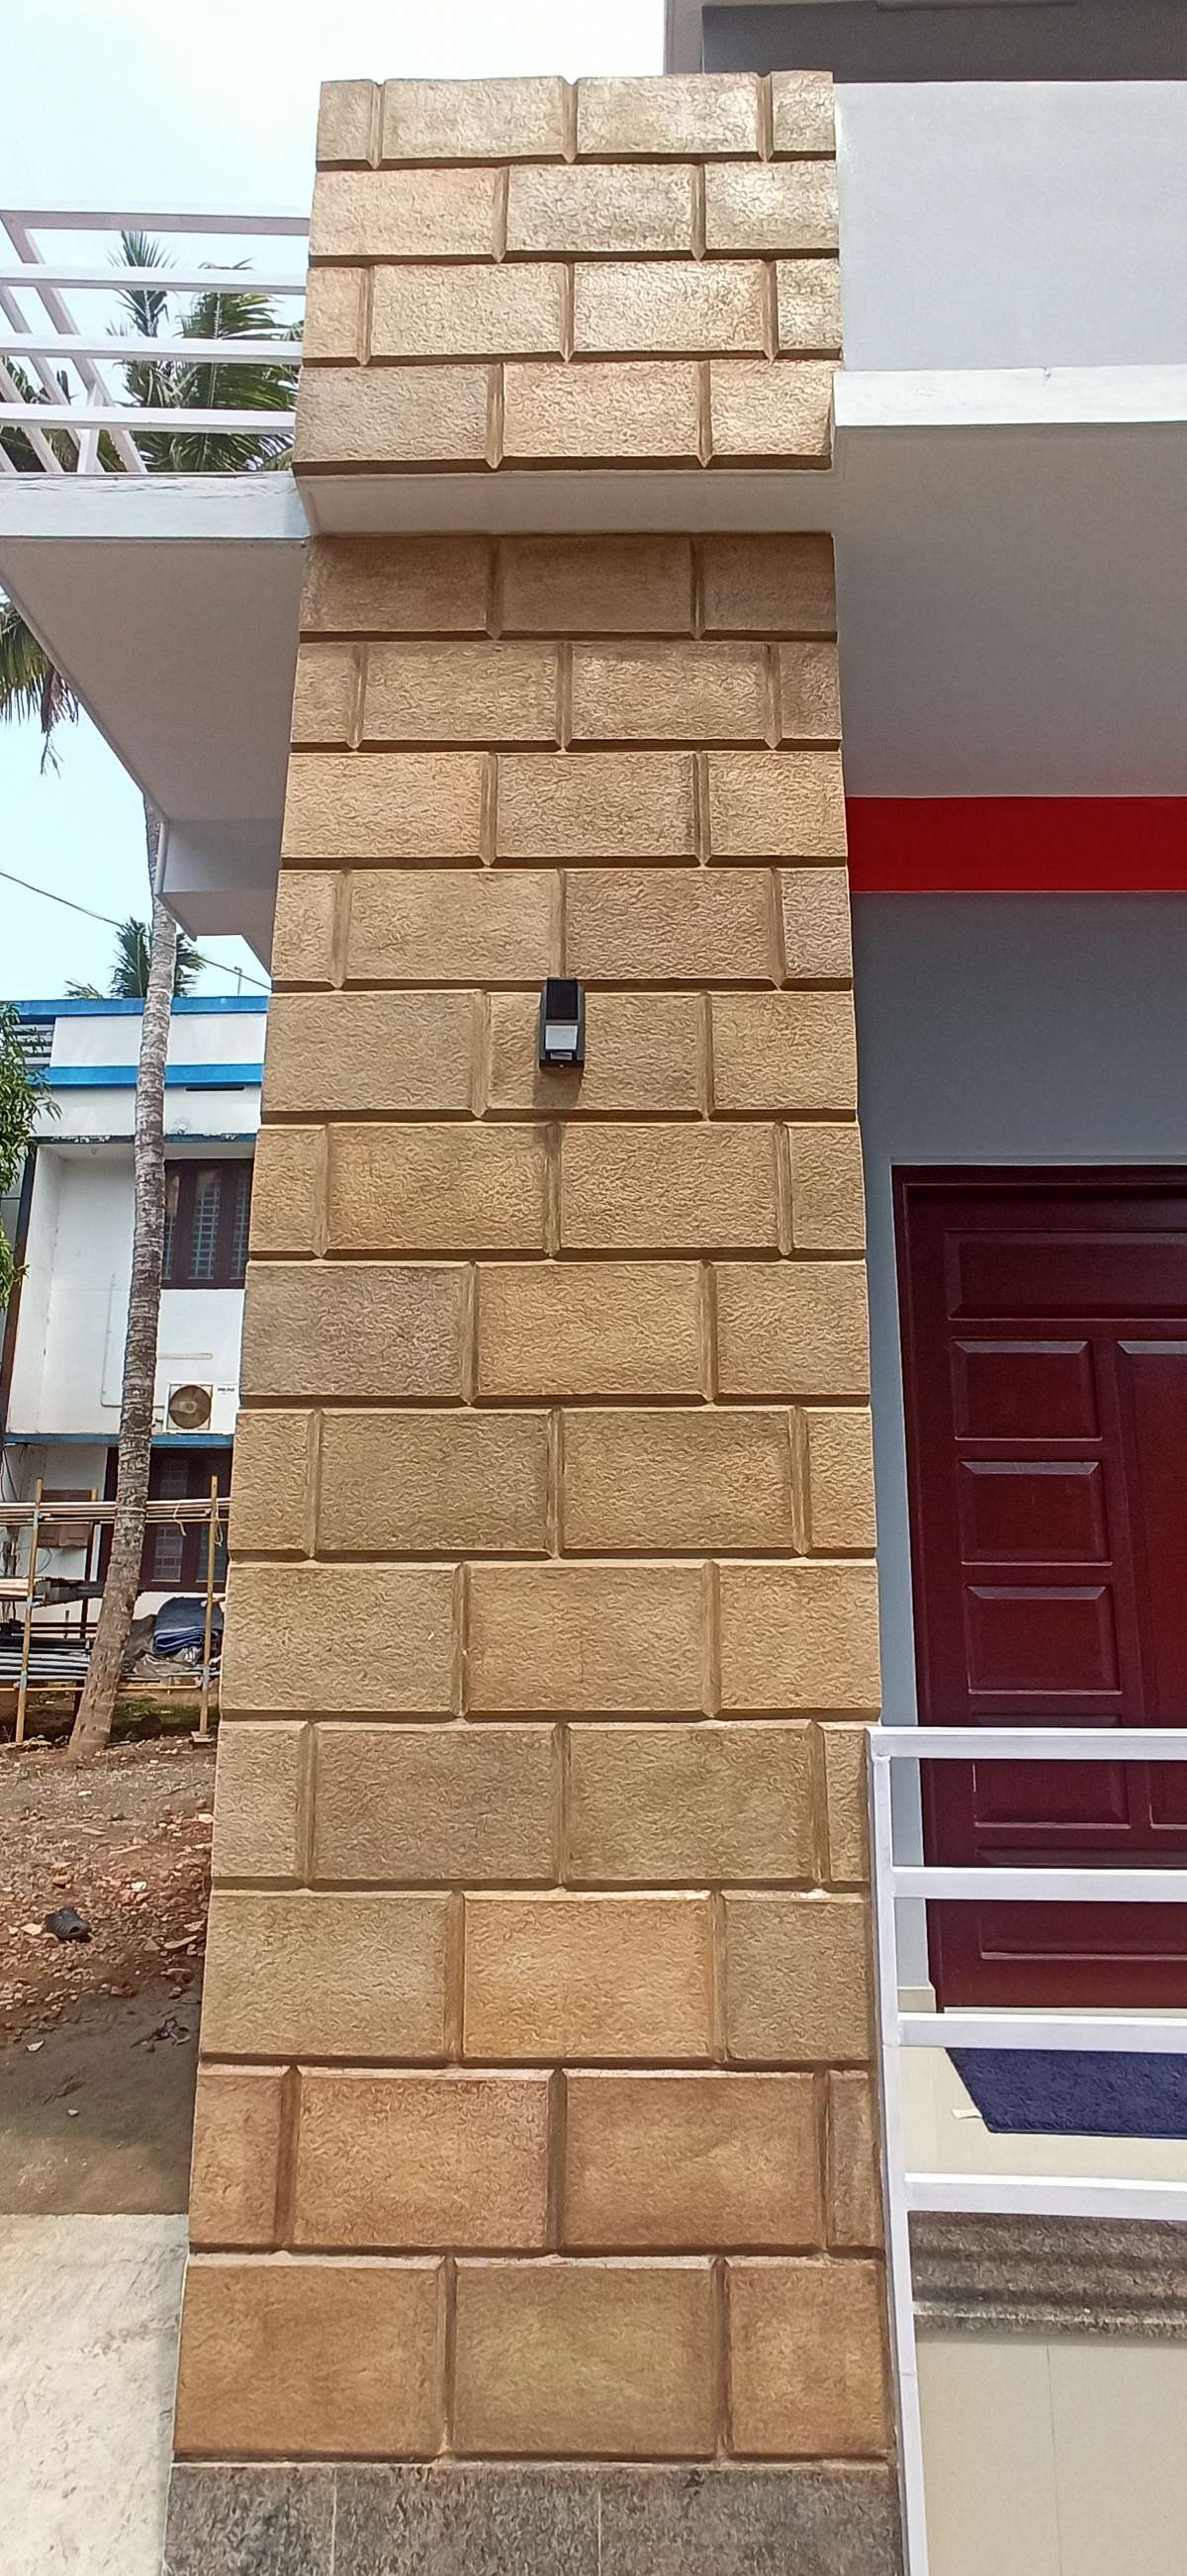 #stonecladding  #artificialstone #Designs #InteriorDesigner #exterior_Work #exteriorcladingstone #ModularKitchen #constructionsite #decoart #constructionsite #progress #TRV #stone #HouseDesigns 

contact :- 956.777.4057